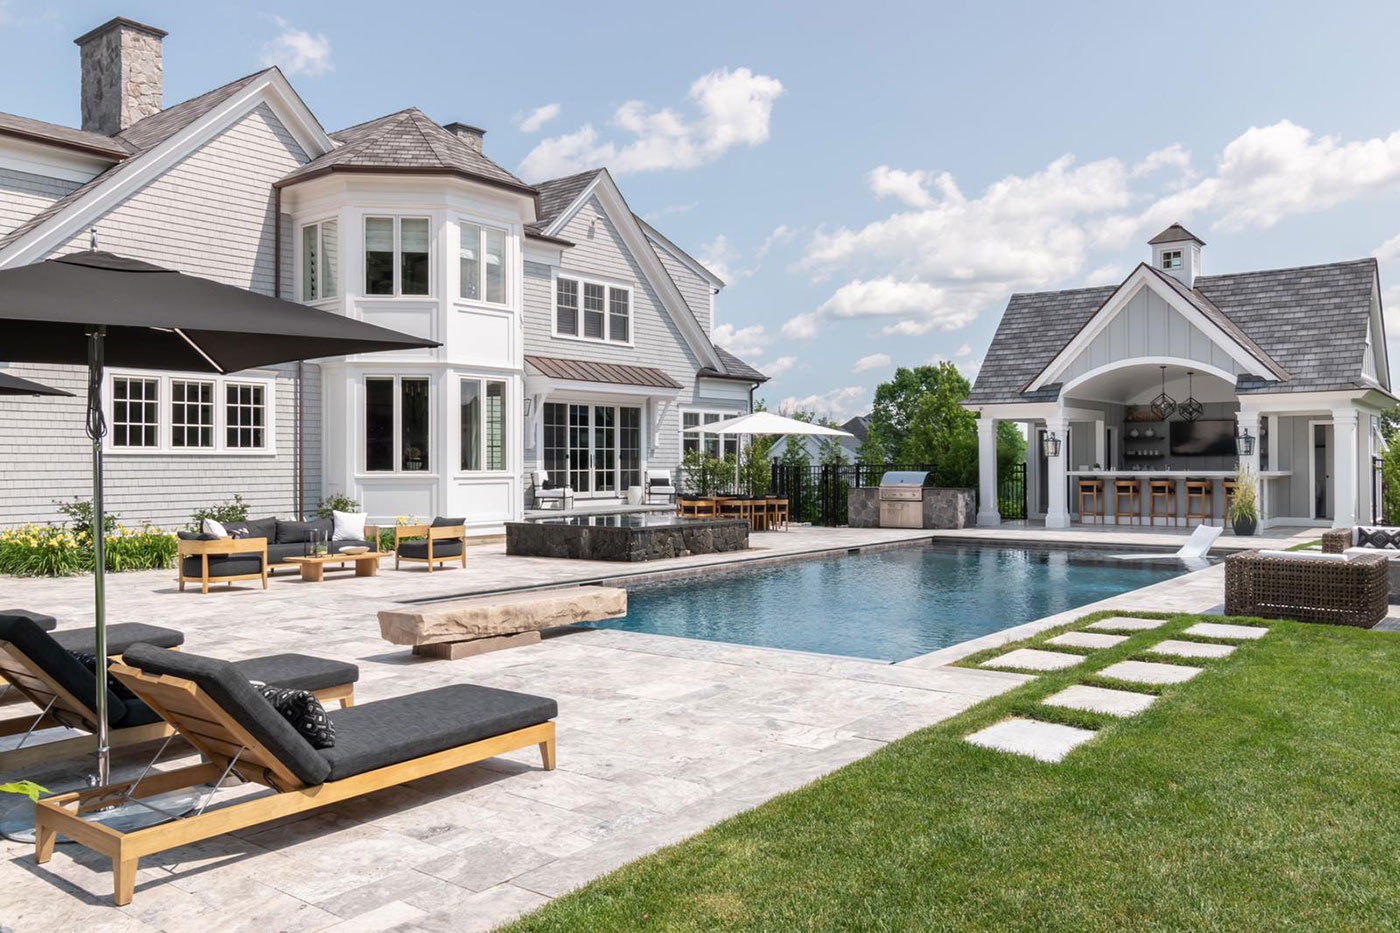 10 Perfect Pool Houses Boston Design Guide